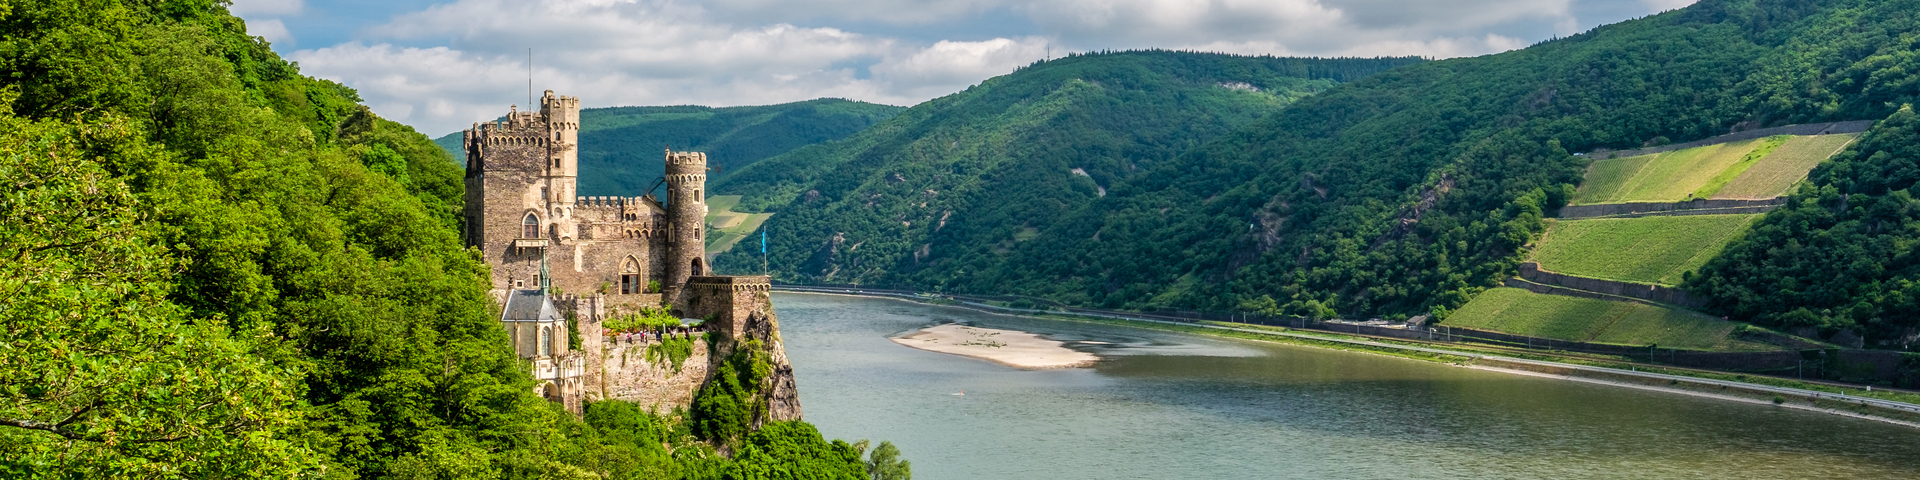 Castles Along the Rhine